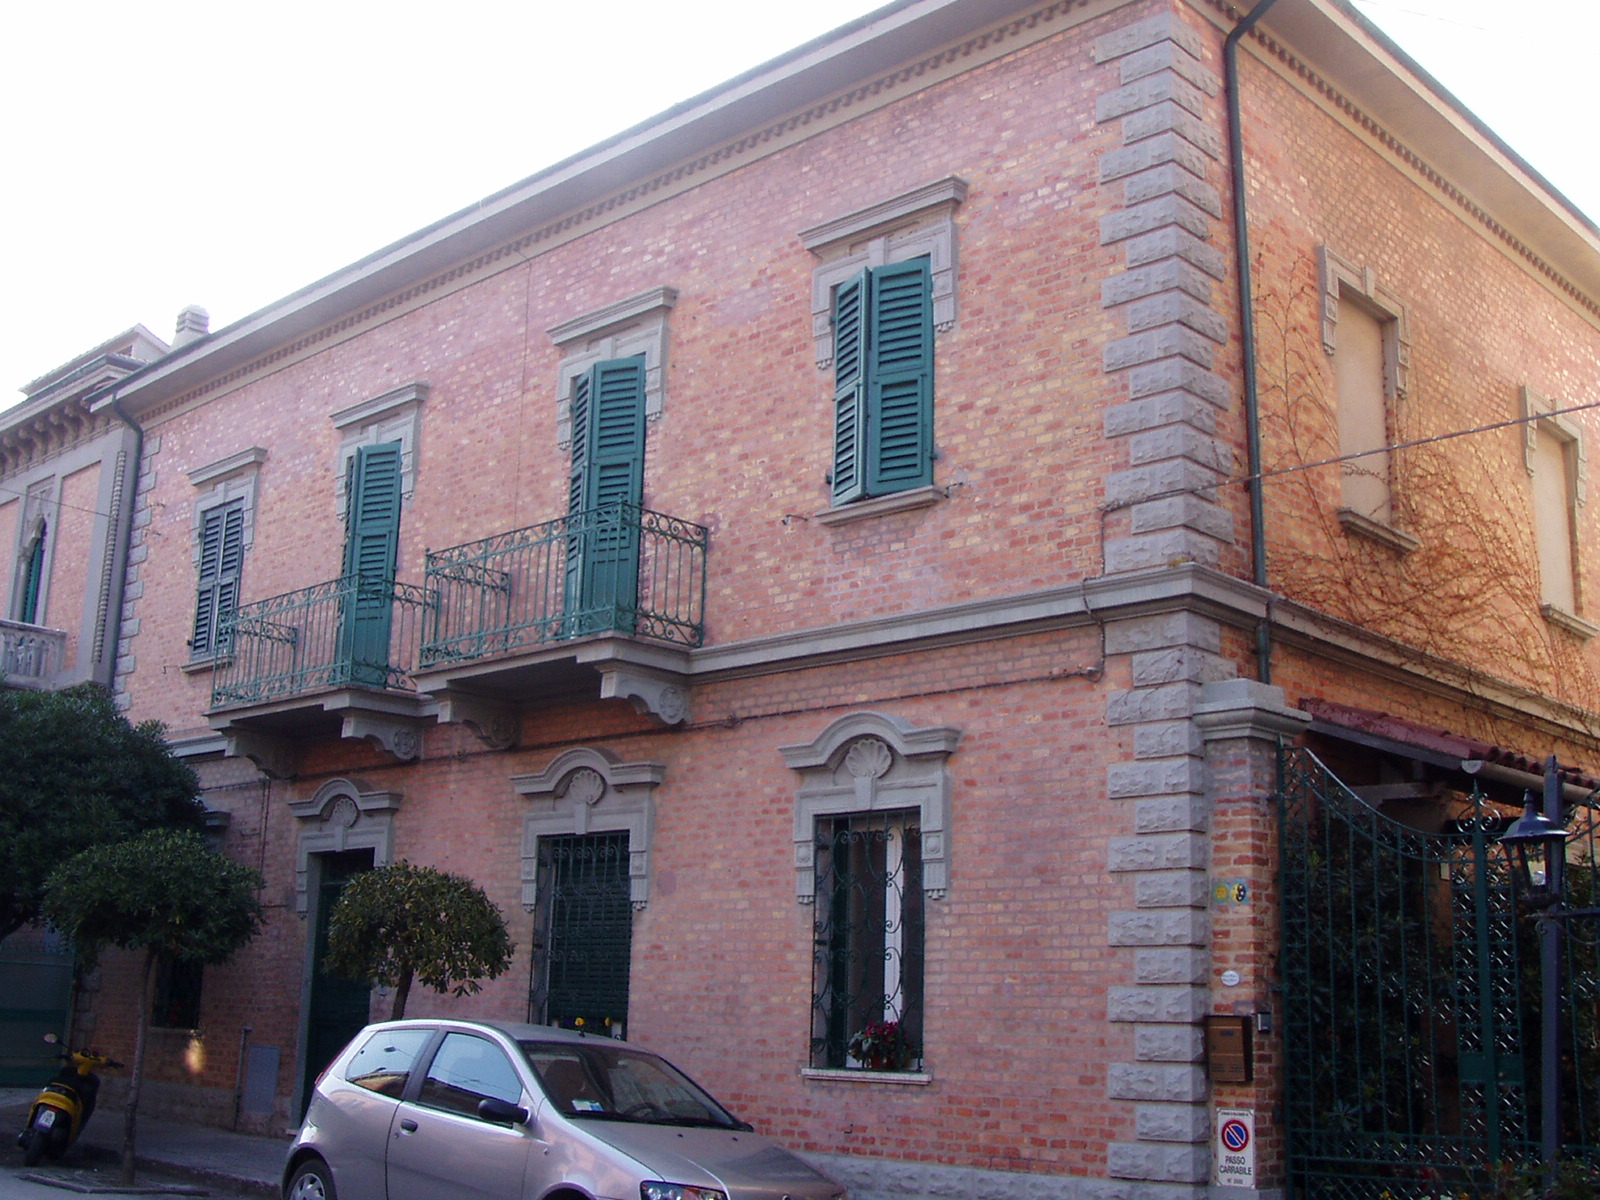 Palazzina di appartamenti (palazzina, di appartamenti) - Falconara Marittima (AN) 